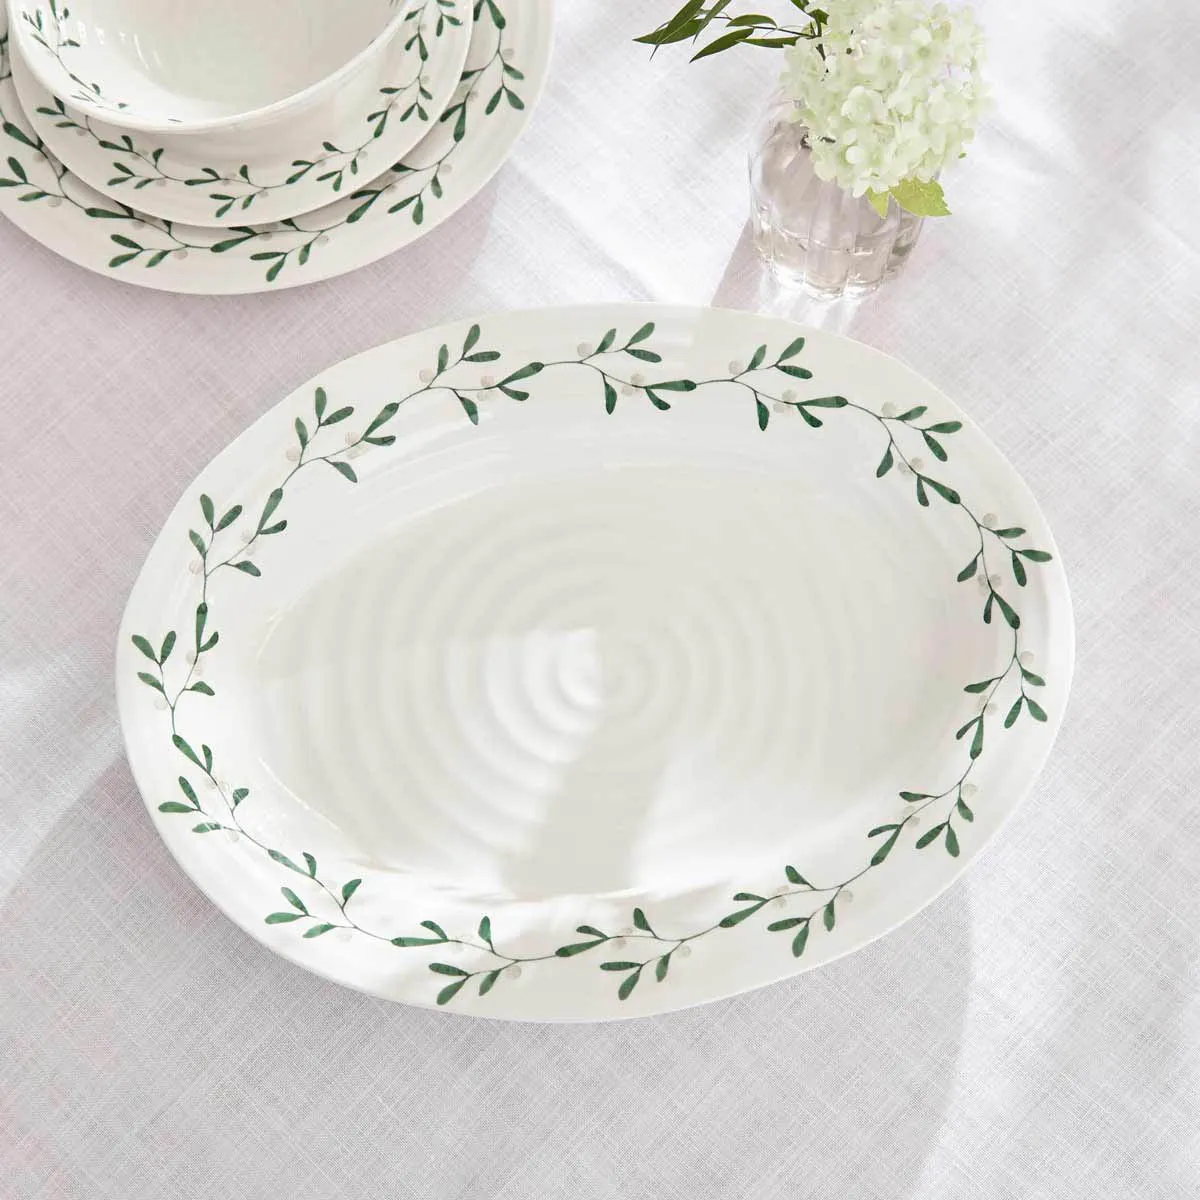 Sophie Conran Mistletoe Oval Platter